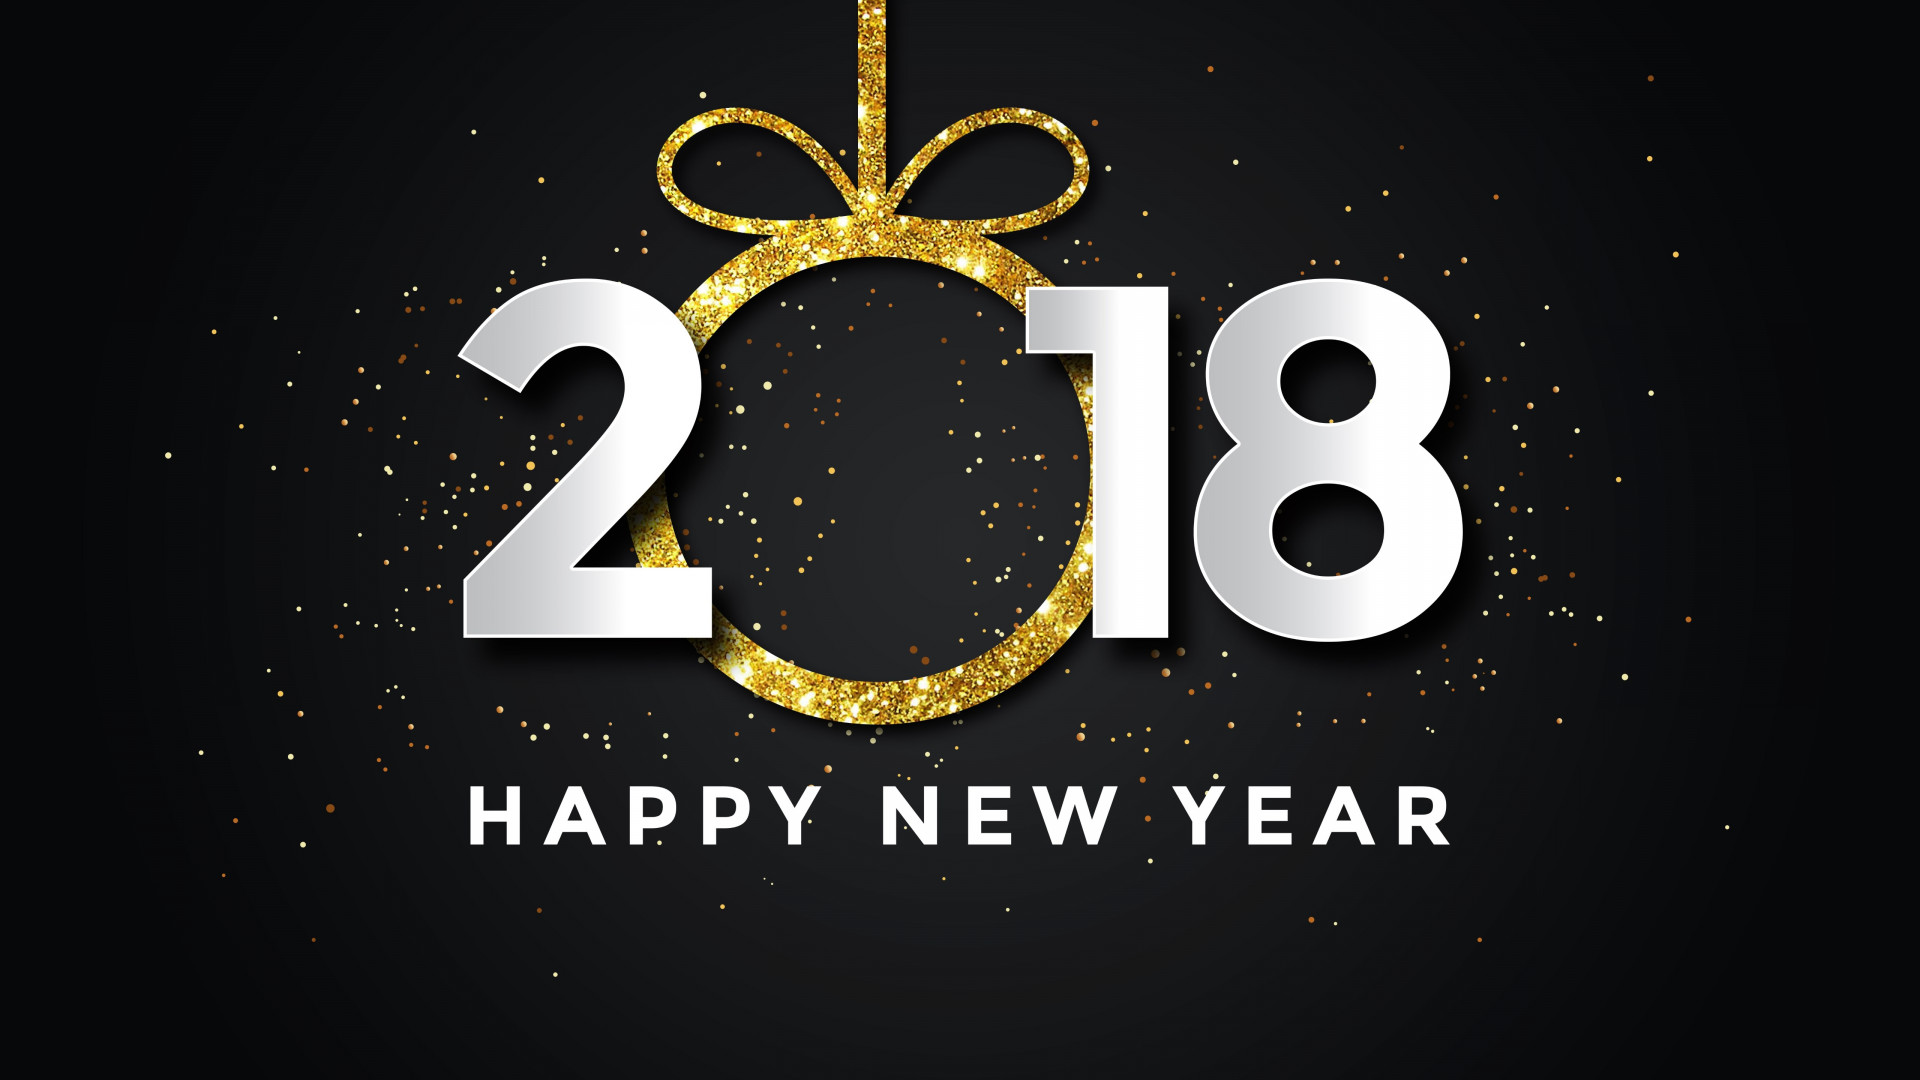 Happy New Year 2018 wallpaper 1920x1080